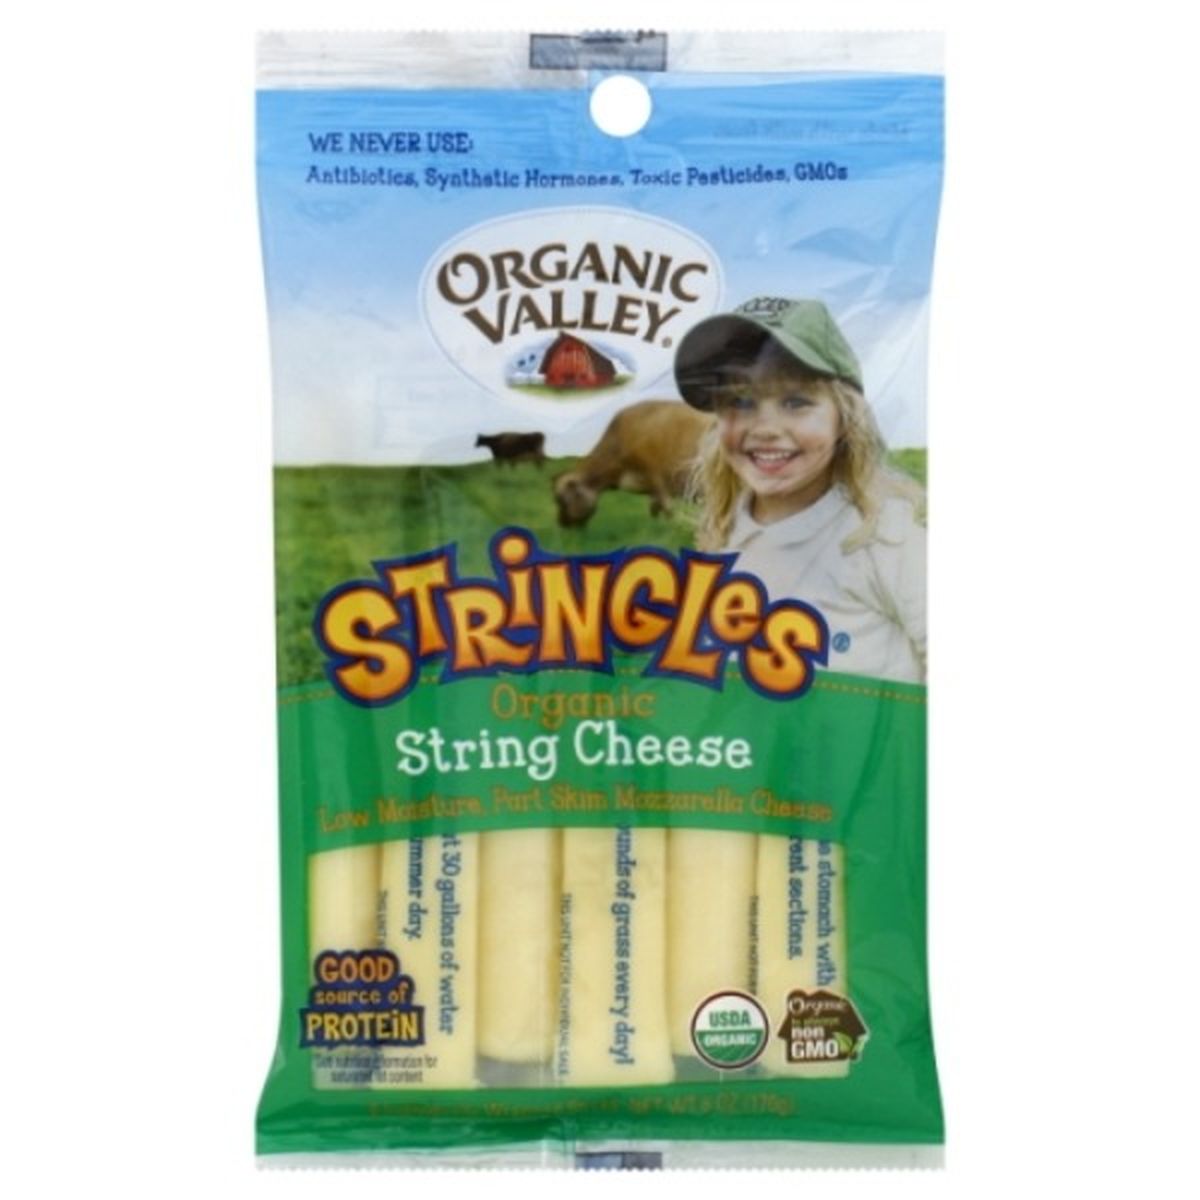 Calories in Organic Valley Stringles String Cheese, Organic, Low Moisture, Mozzarella, Part Skim